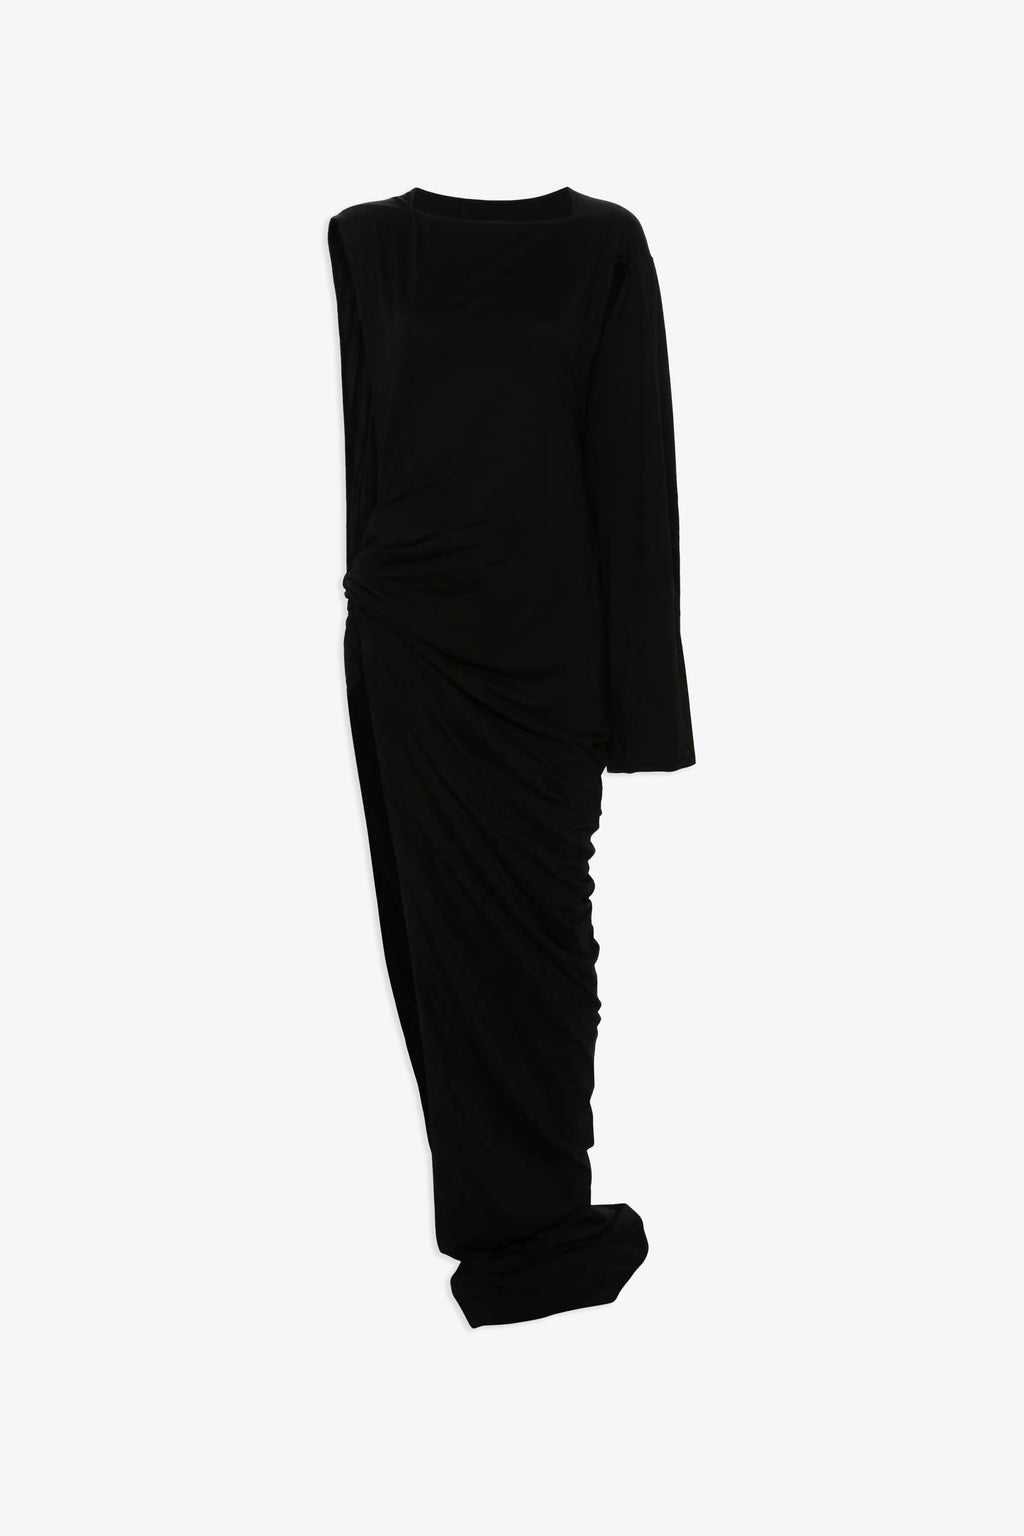 alt-image__Black-cotton-long-asymmetric-dress---Edfu-Gown